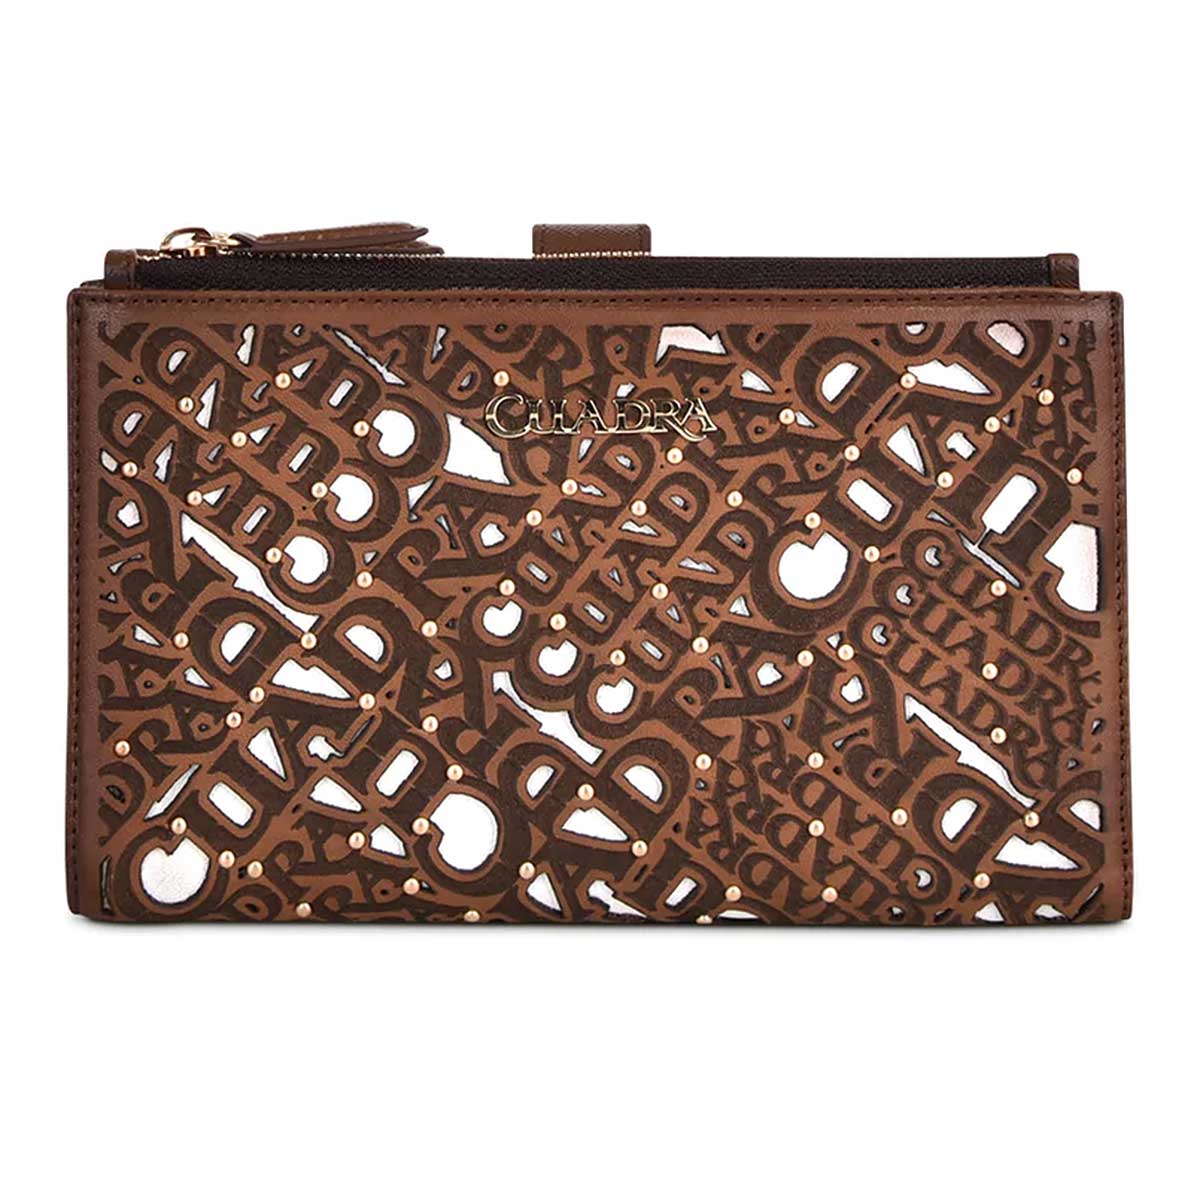 Cuadra laser cut monogram brown leather wallet